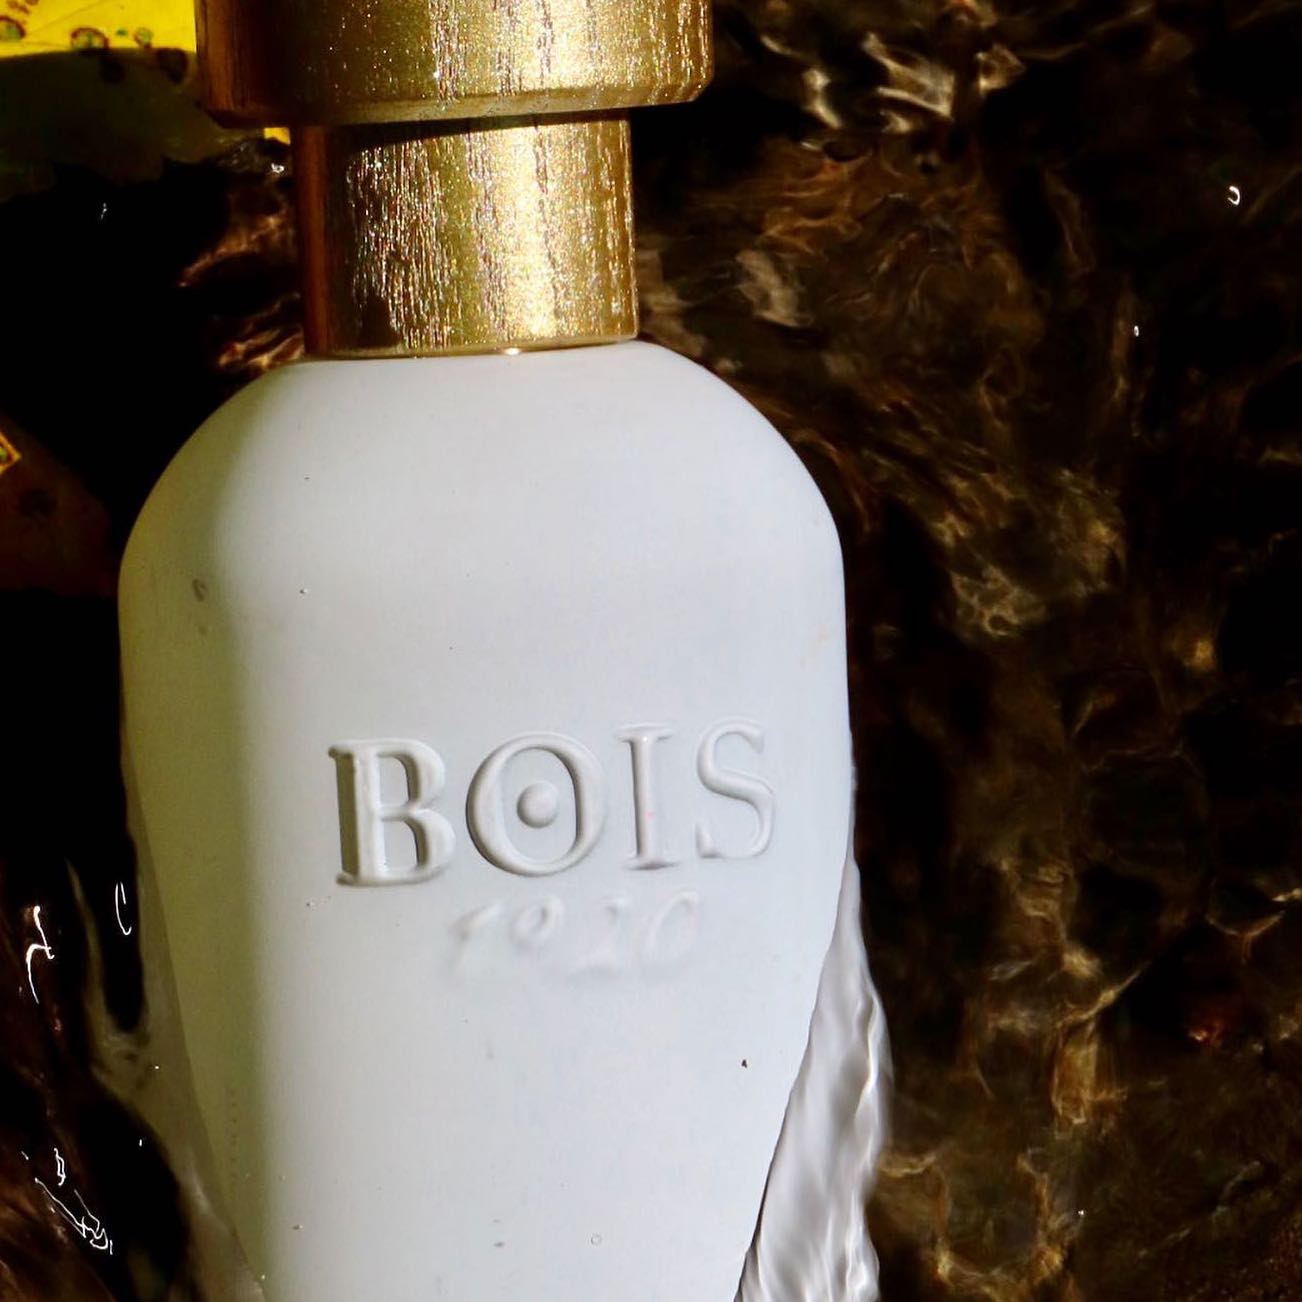 Bois 1920 Oro Bianco EDP | My Perfume Shop Australia